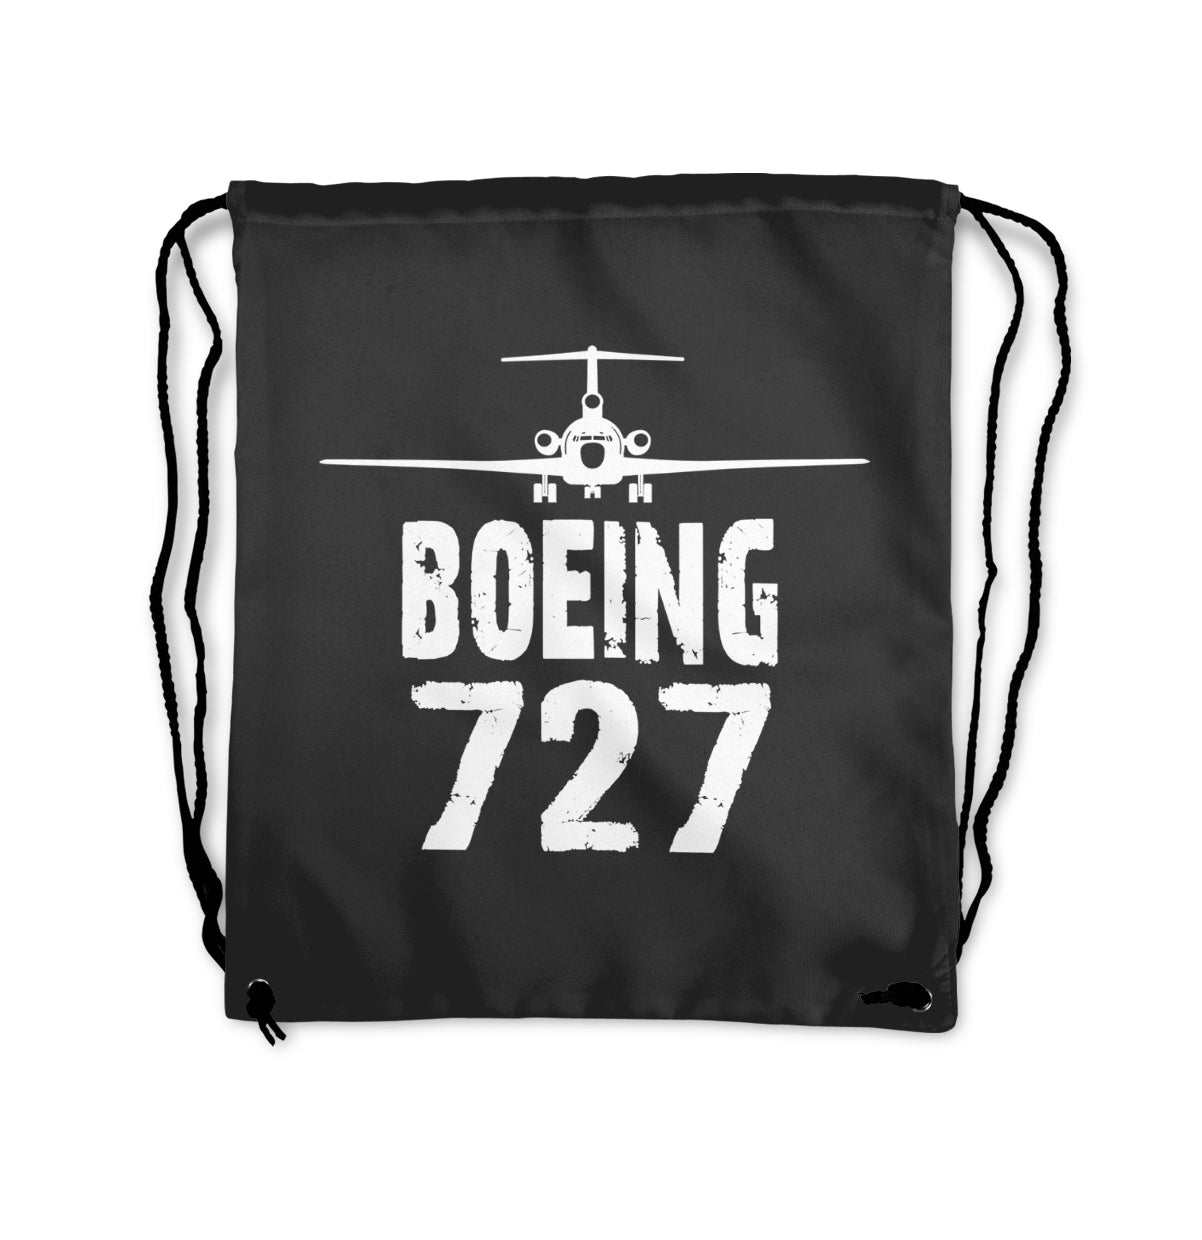 Boeing 727 & Plane Designed Drawstring Bags